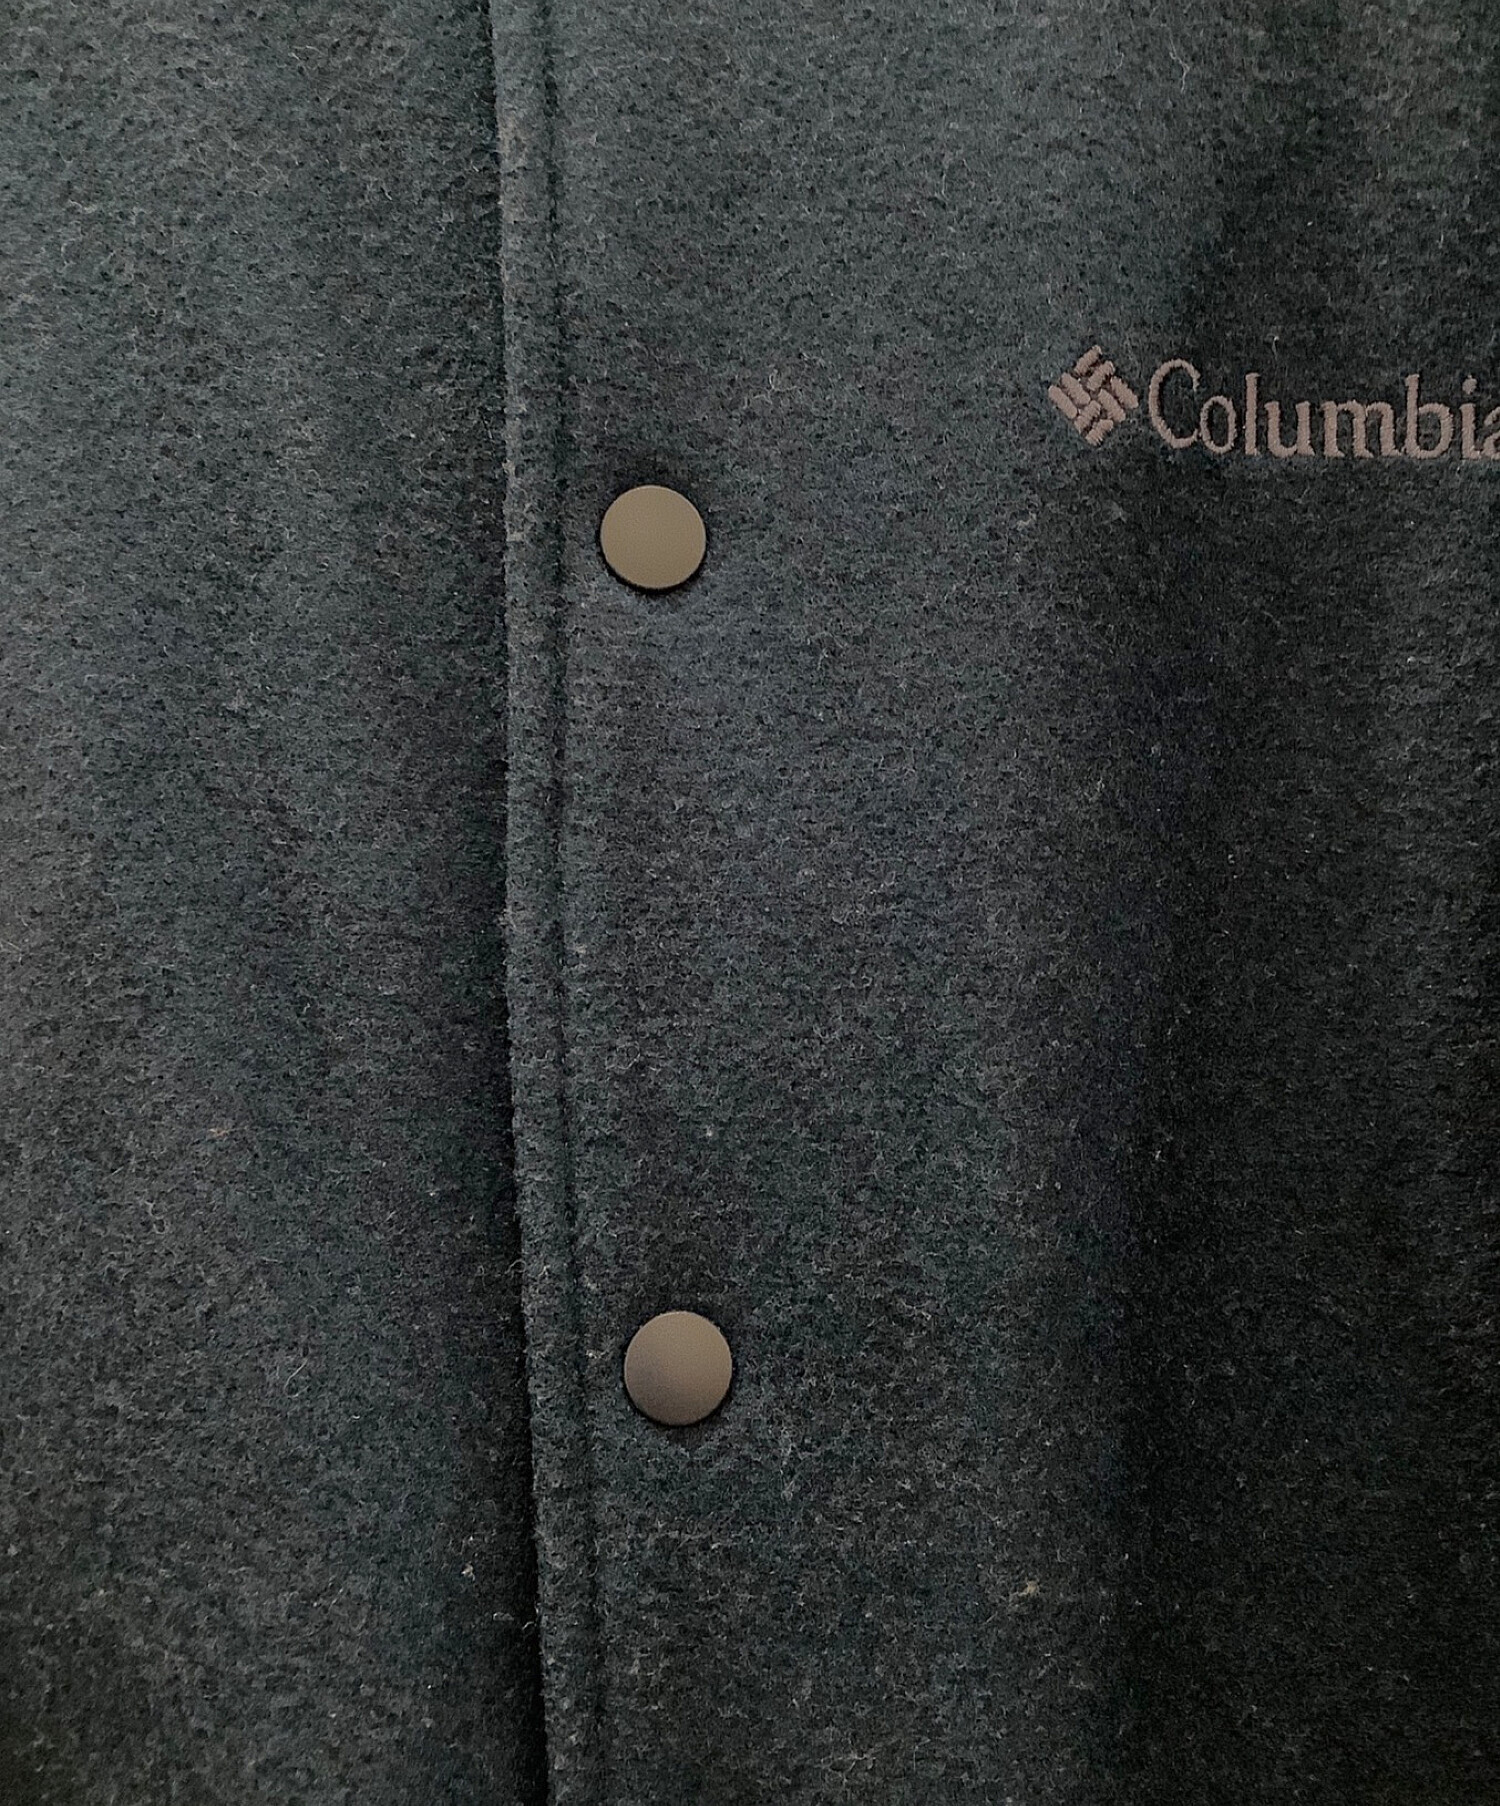 Columbia × Kinetics × Keith Haring (コロンビア × キネティクス × キースヘリング) スタジャン  ネイビー×ベージュ サイズ:L